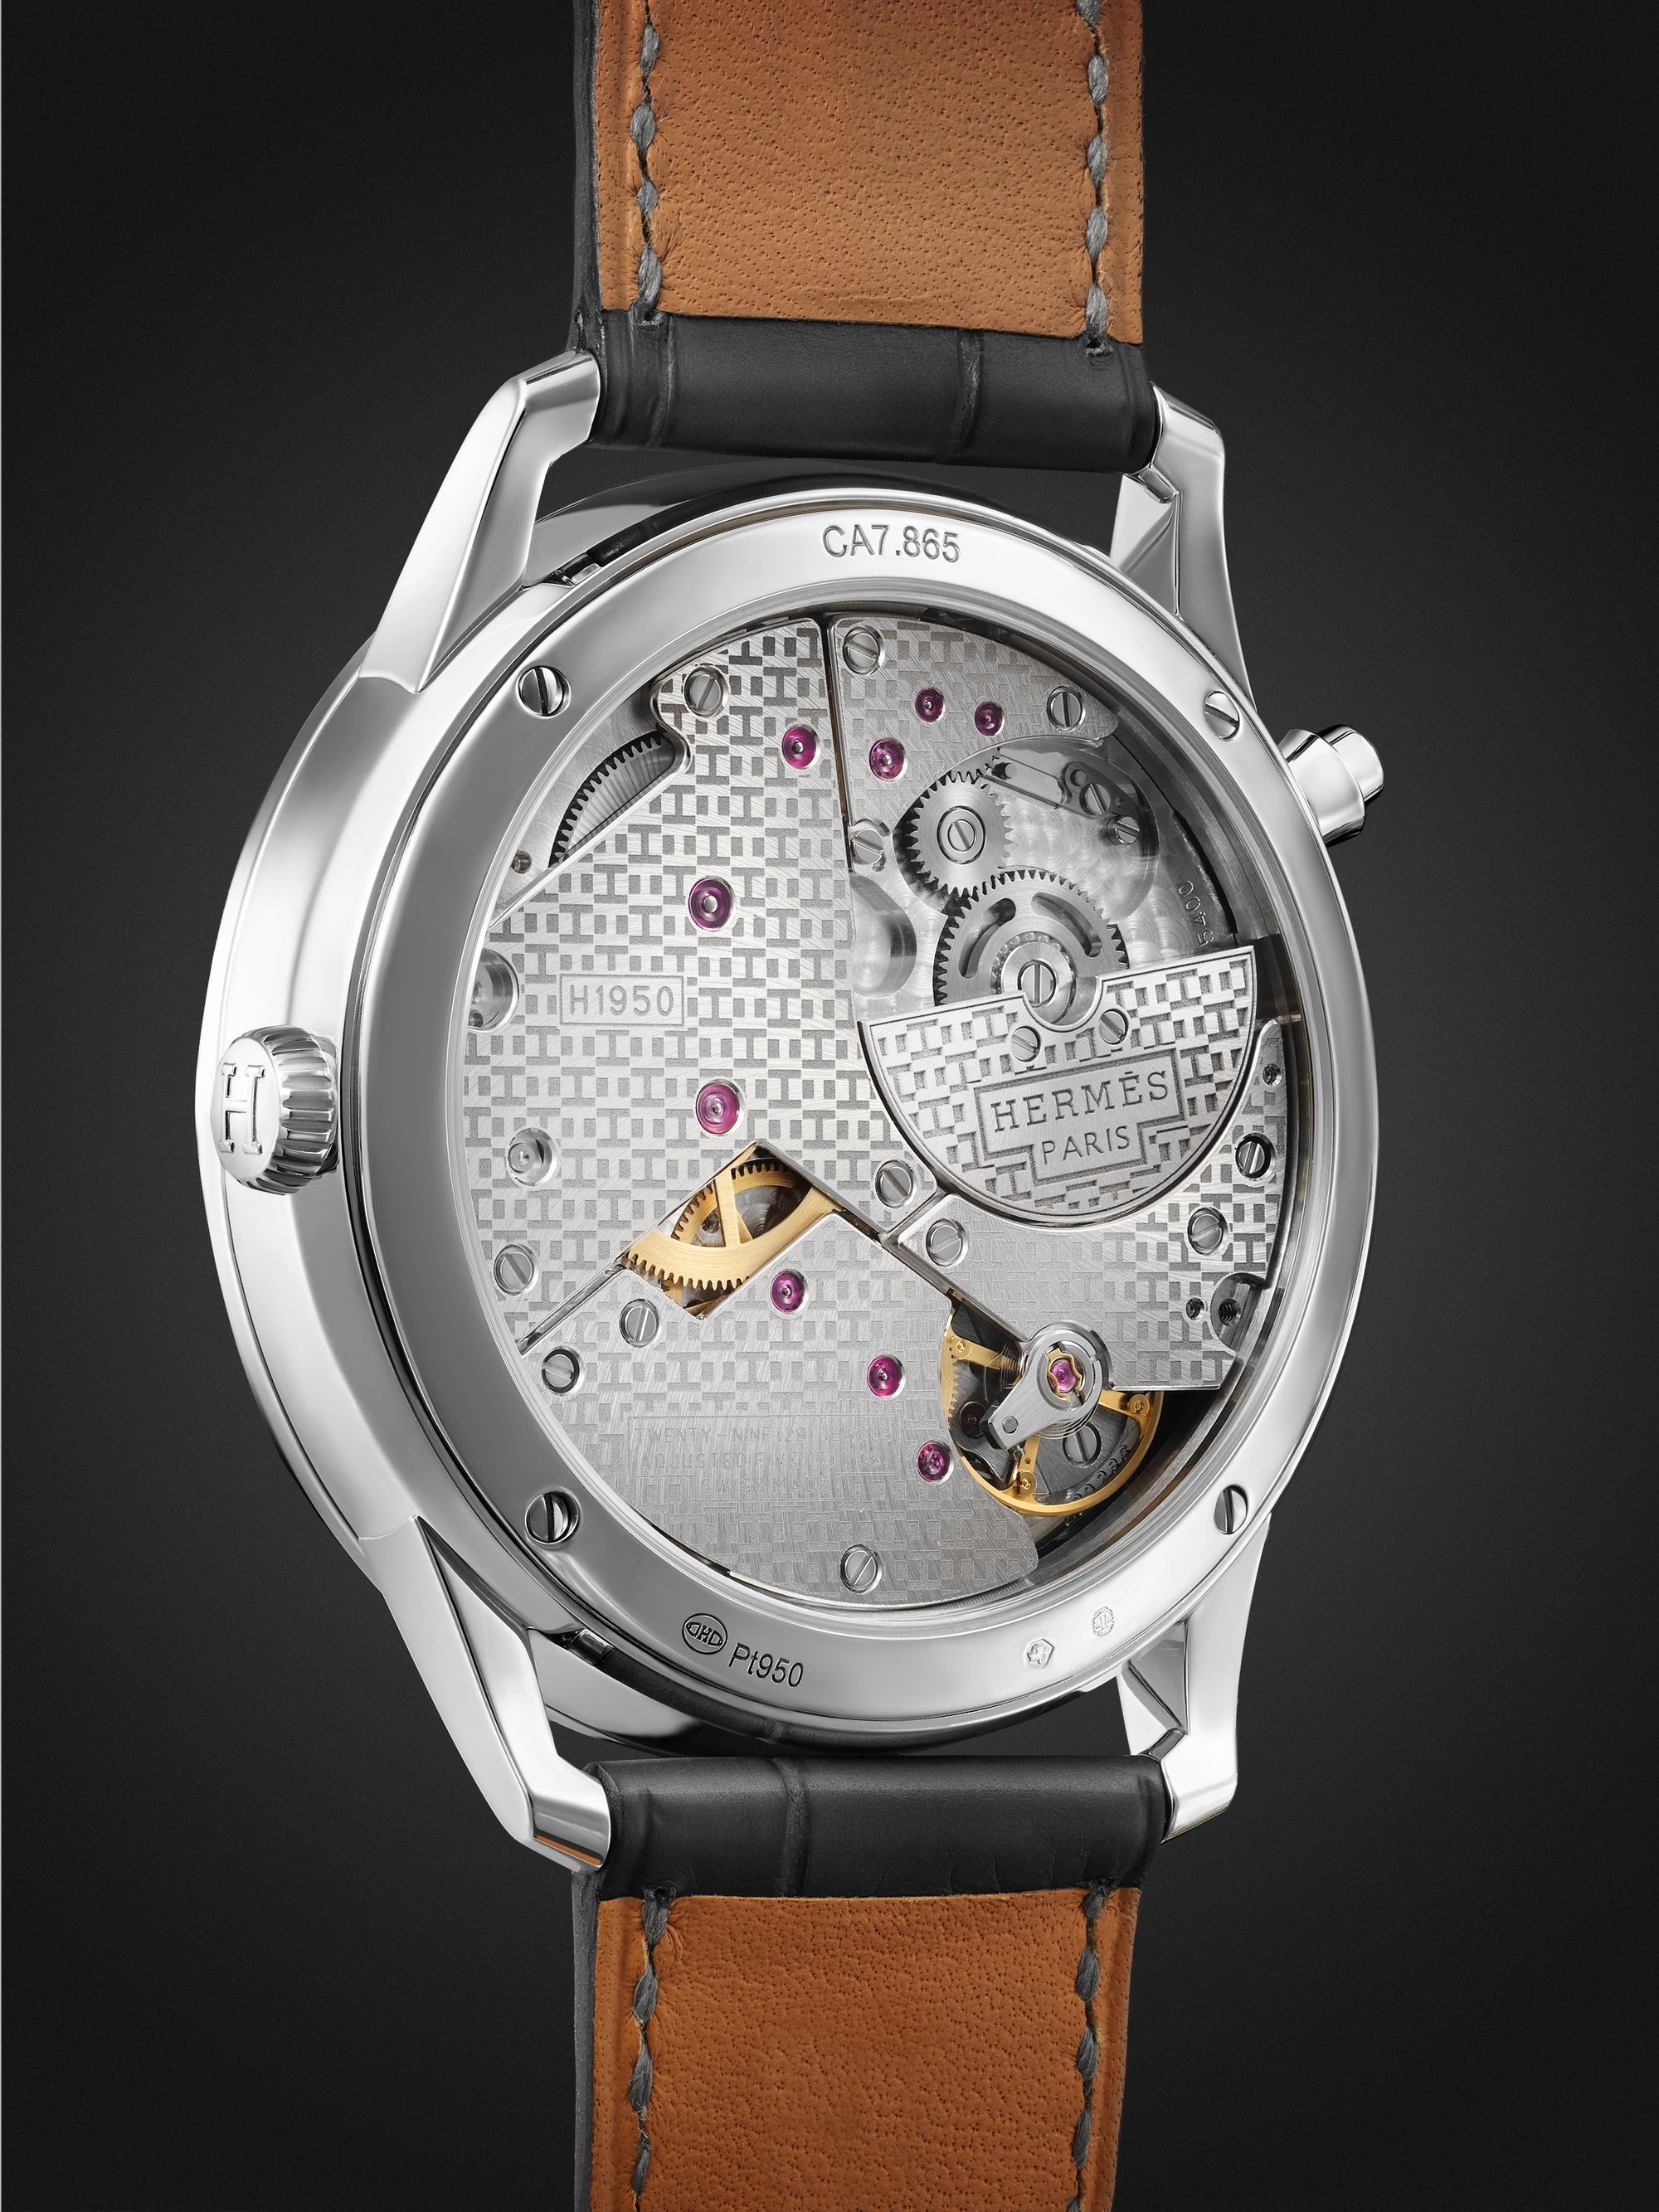 HERMÈS TIMEPIECES Slim d'Hermès Automatic GMT 39mm Platinum and Alligator Watch, Ref. No. 054192WW00